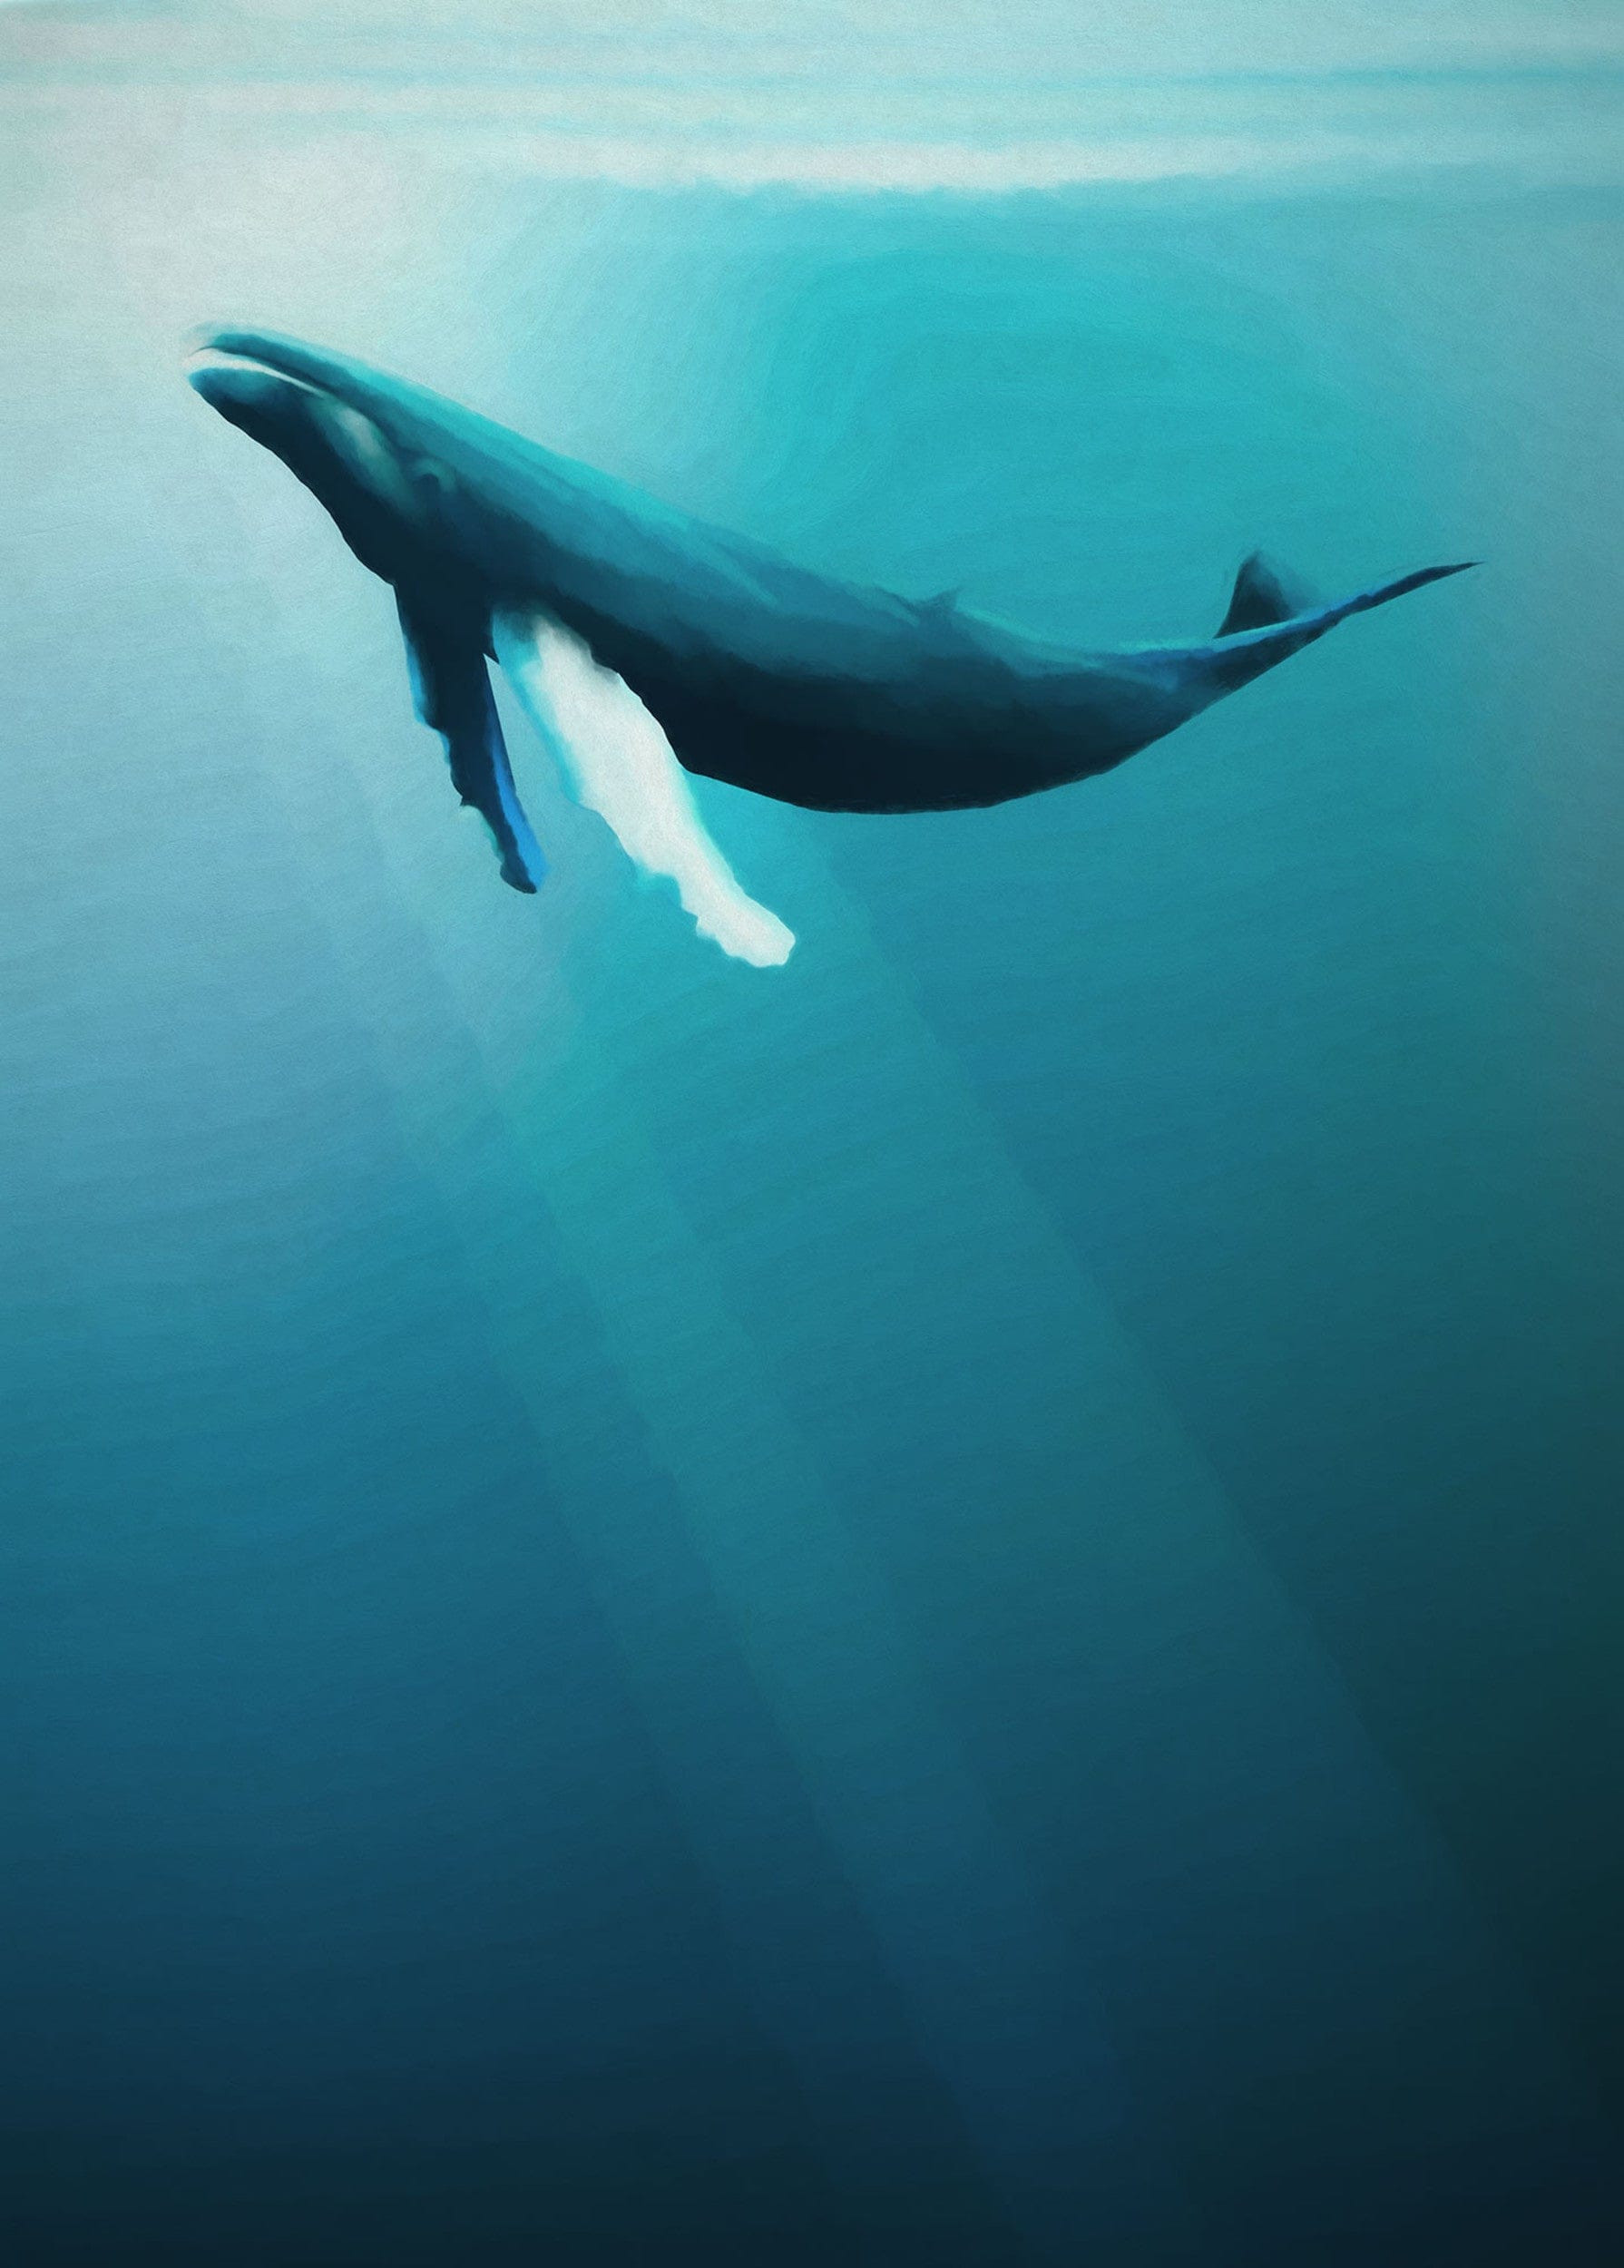 Fotobehang - Artsy Humpback Whale 200x280cm - Vliesbehang